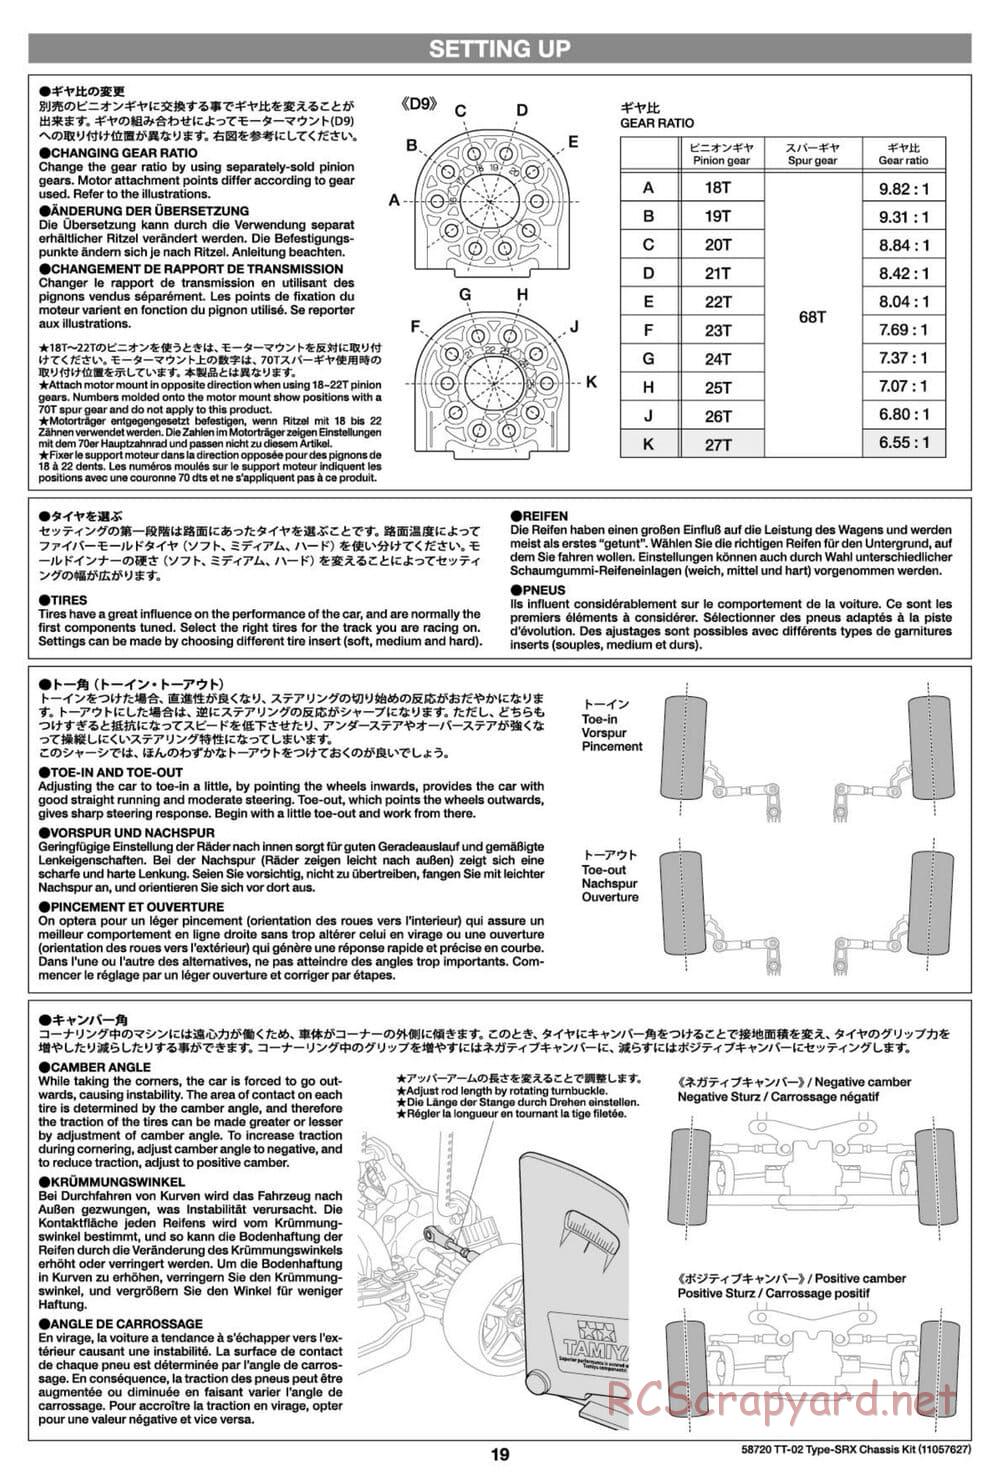 Tamiya - TT-02 Type-SRX Chassis - Manual - Page 19